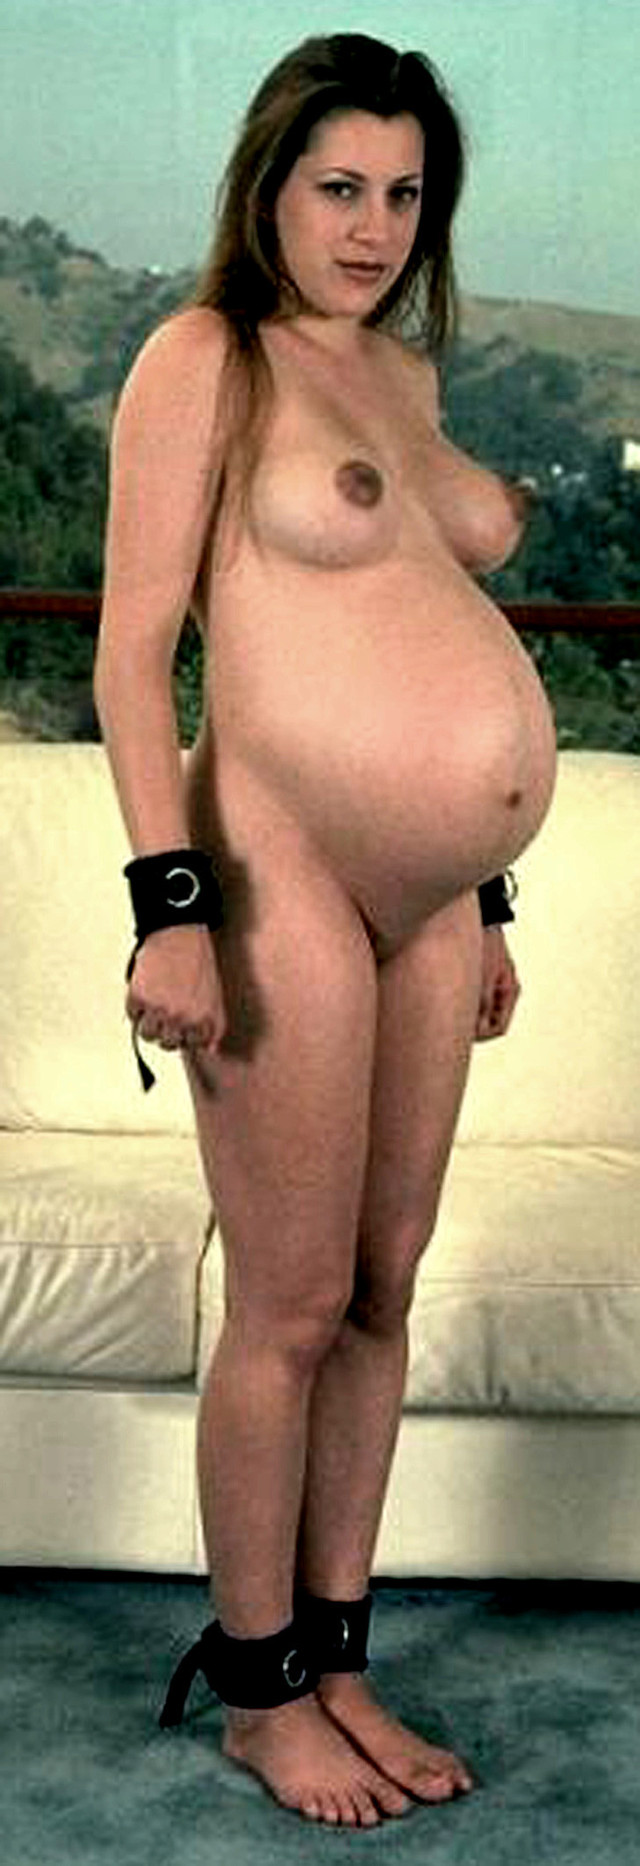 mature pregnant porn mature porn photo fetish pregnant frontal preggo schwanger